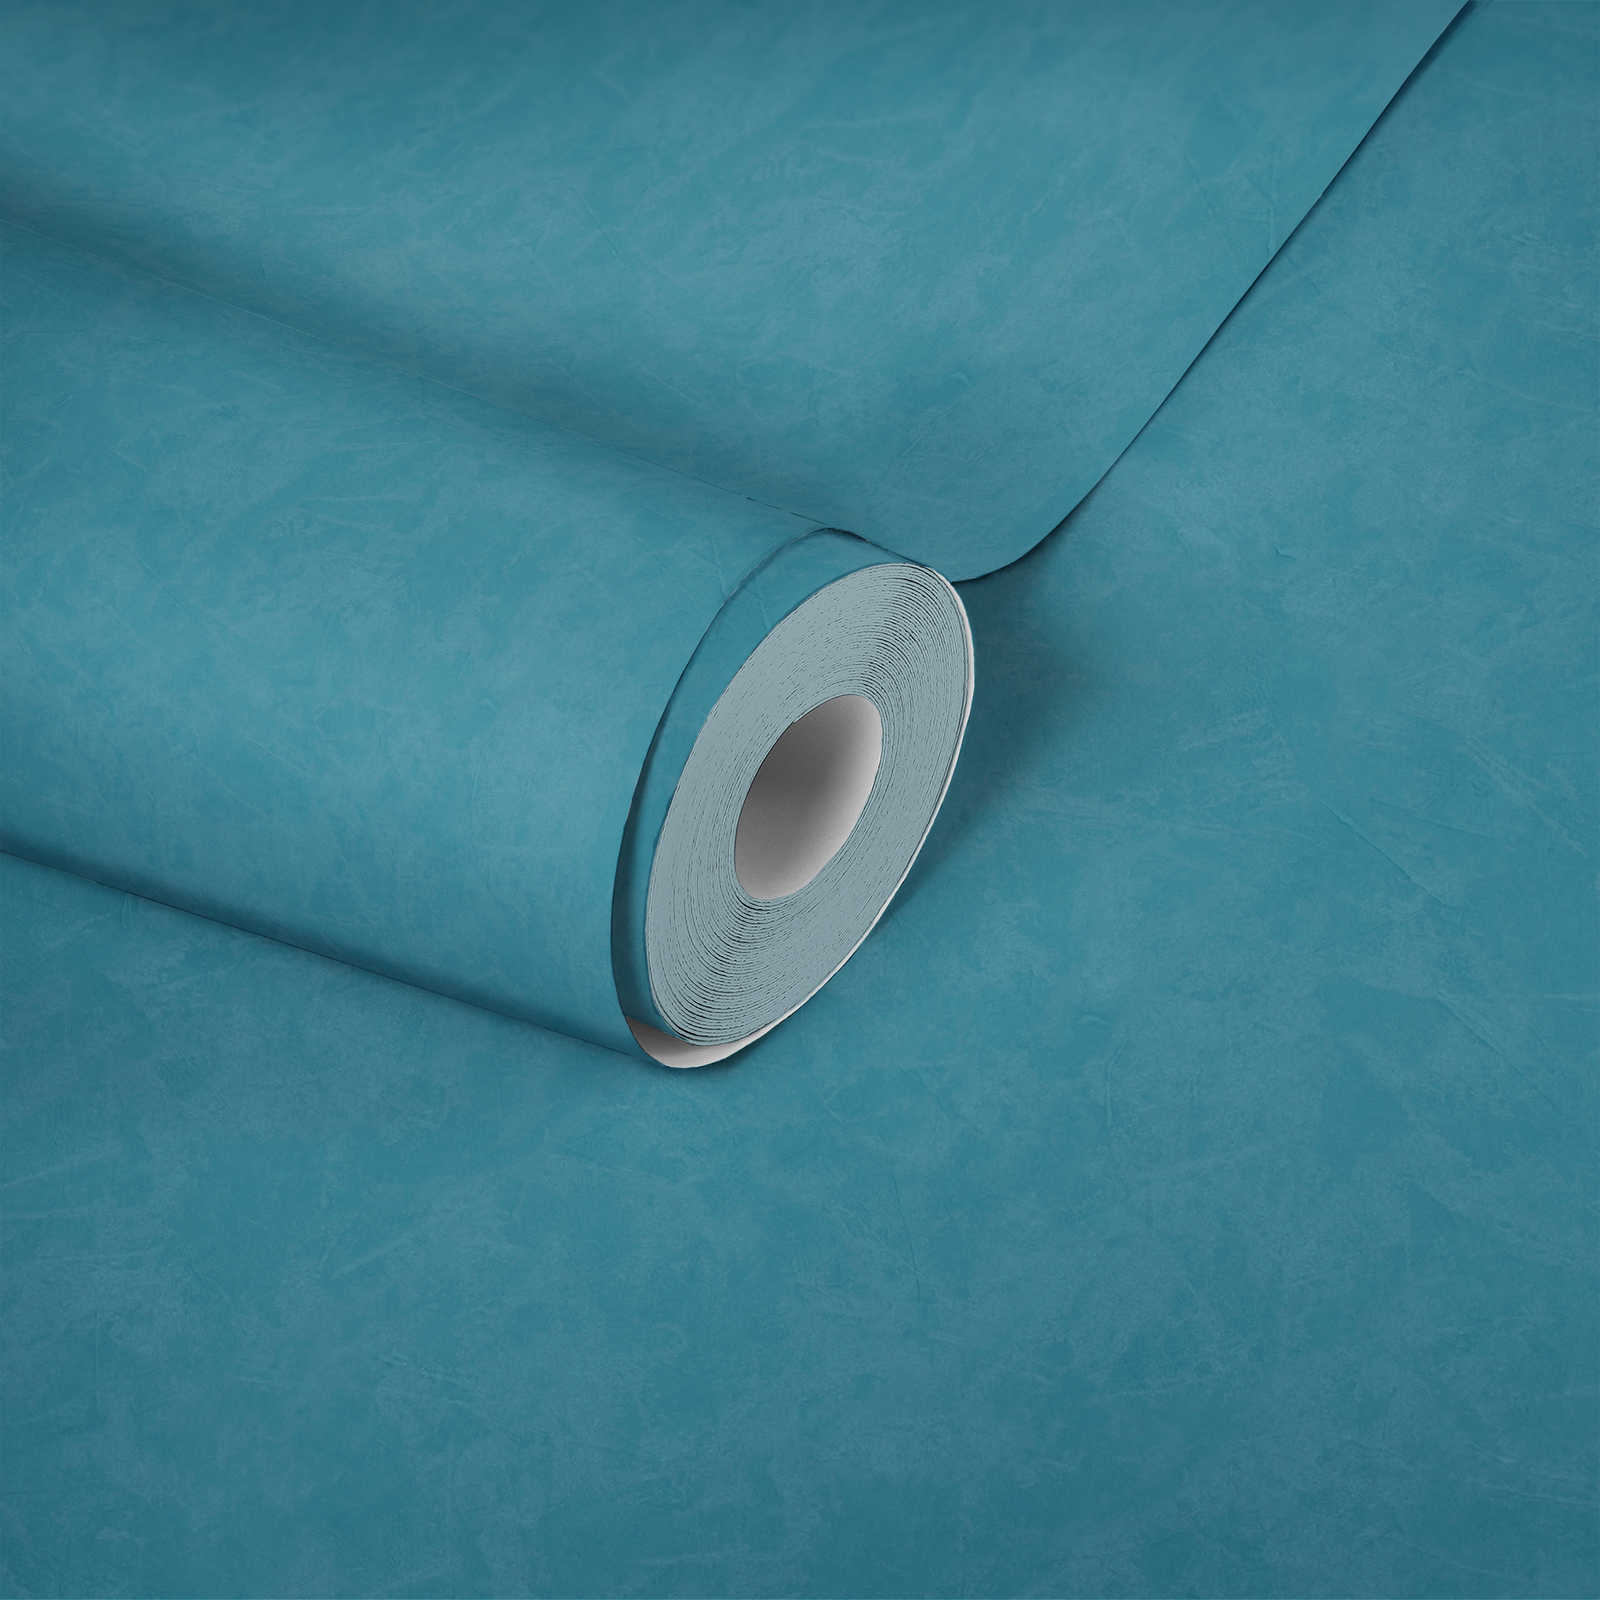             Plain non-woven wallpaper with trowel plaster look - blue, petrol
        